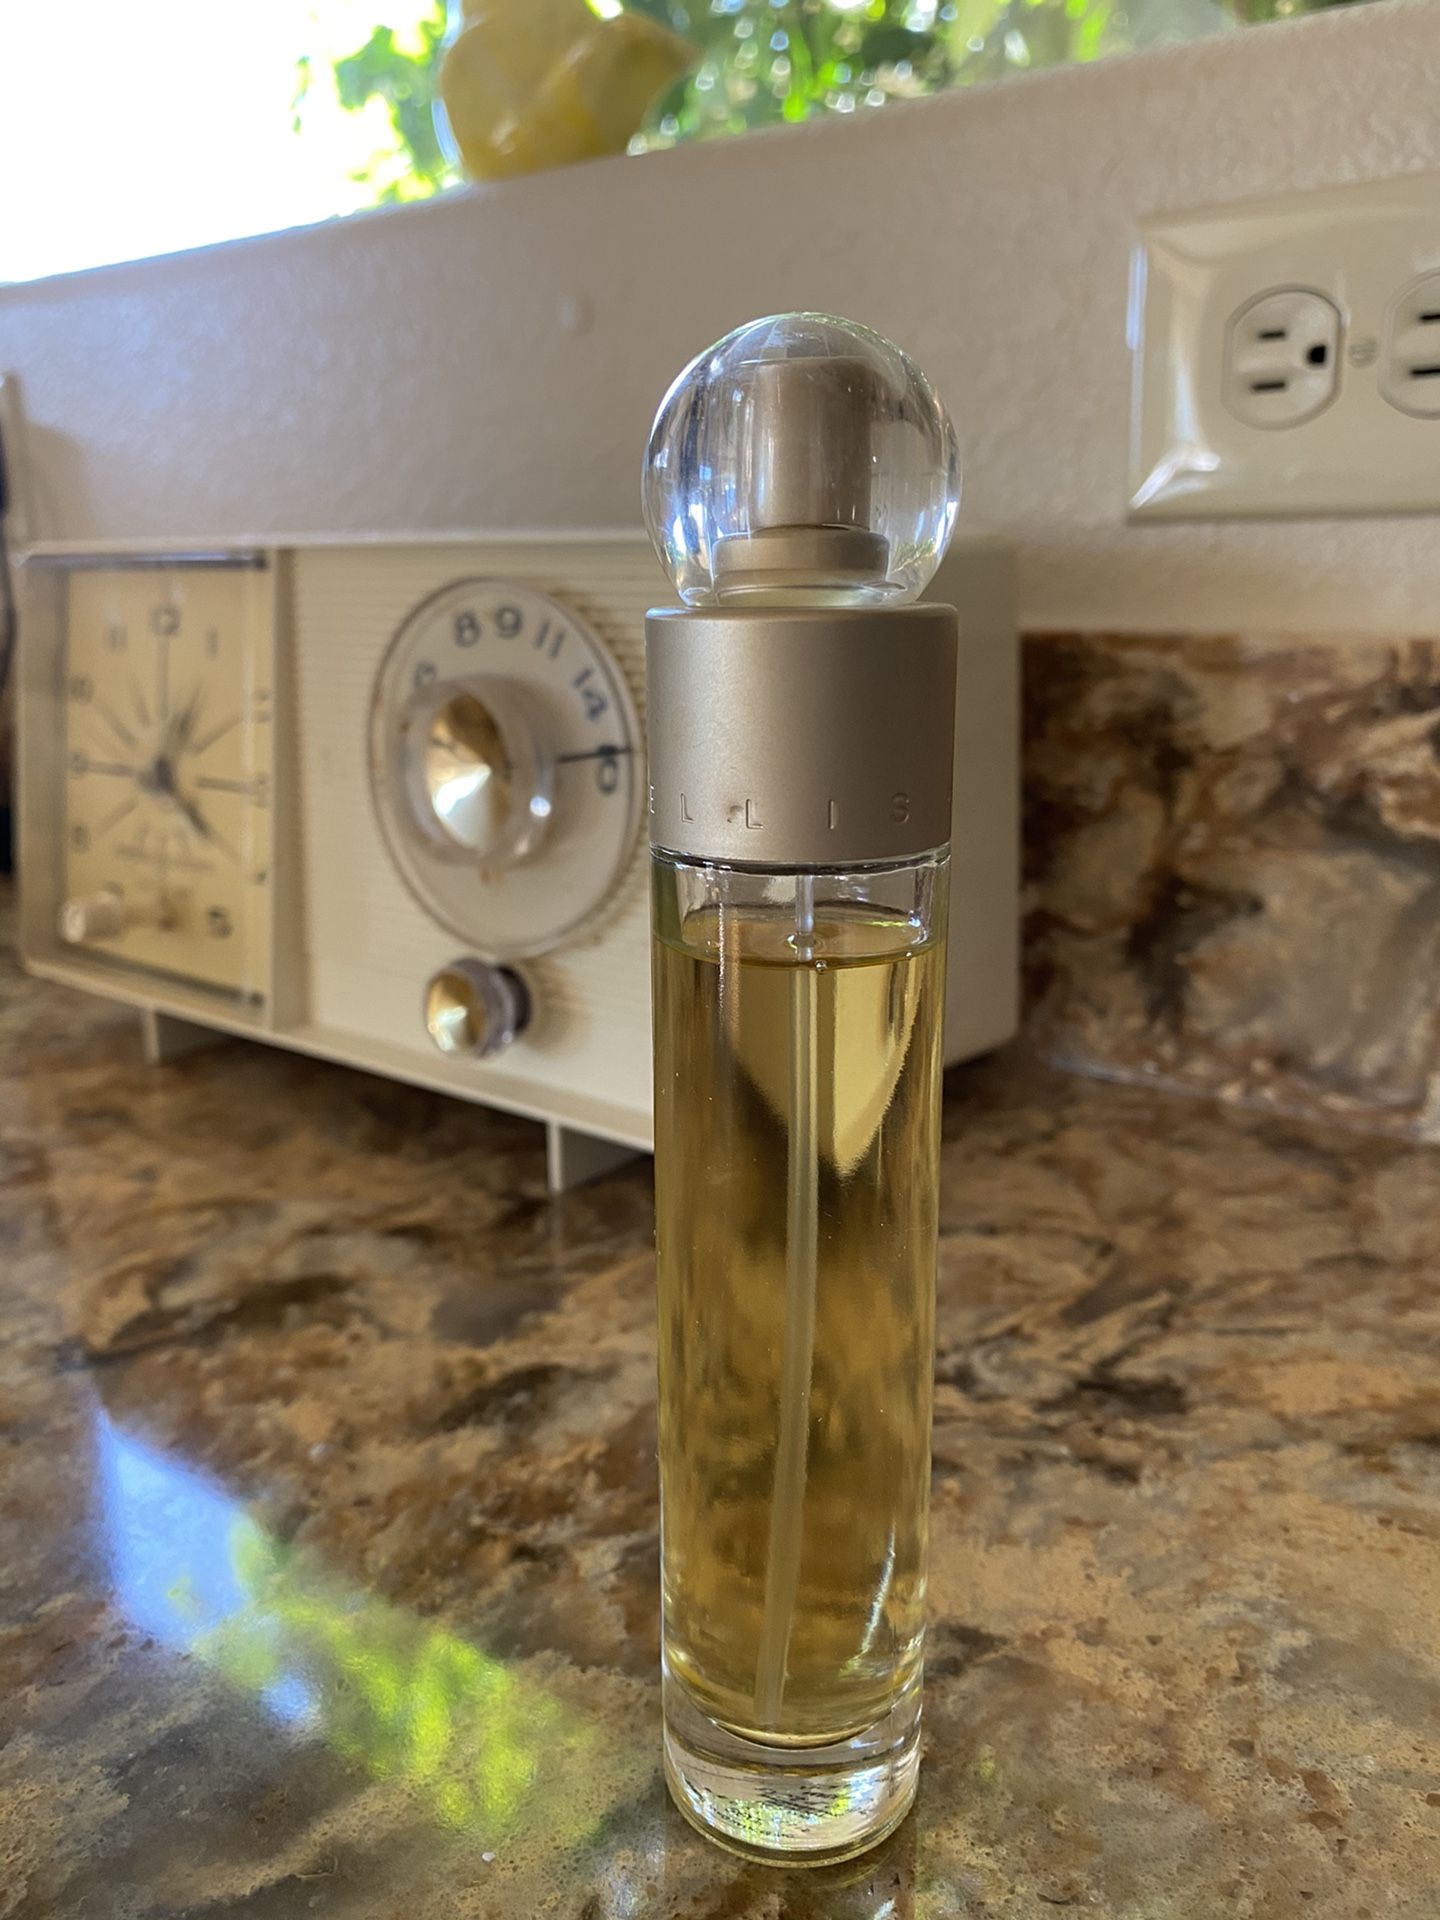 360 Perry Ellis fragrance for woman. 6.8 oz size spray.